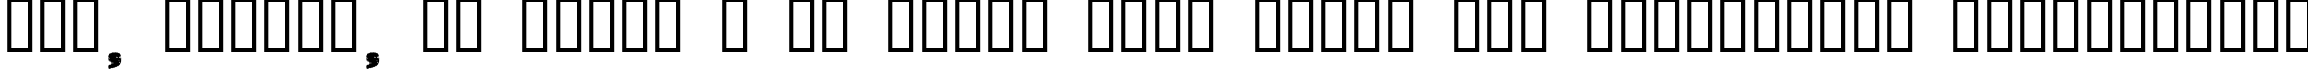 Пример написания шрифтом DISCOBOX текста на украинском